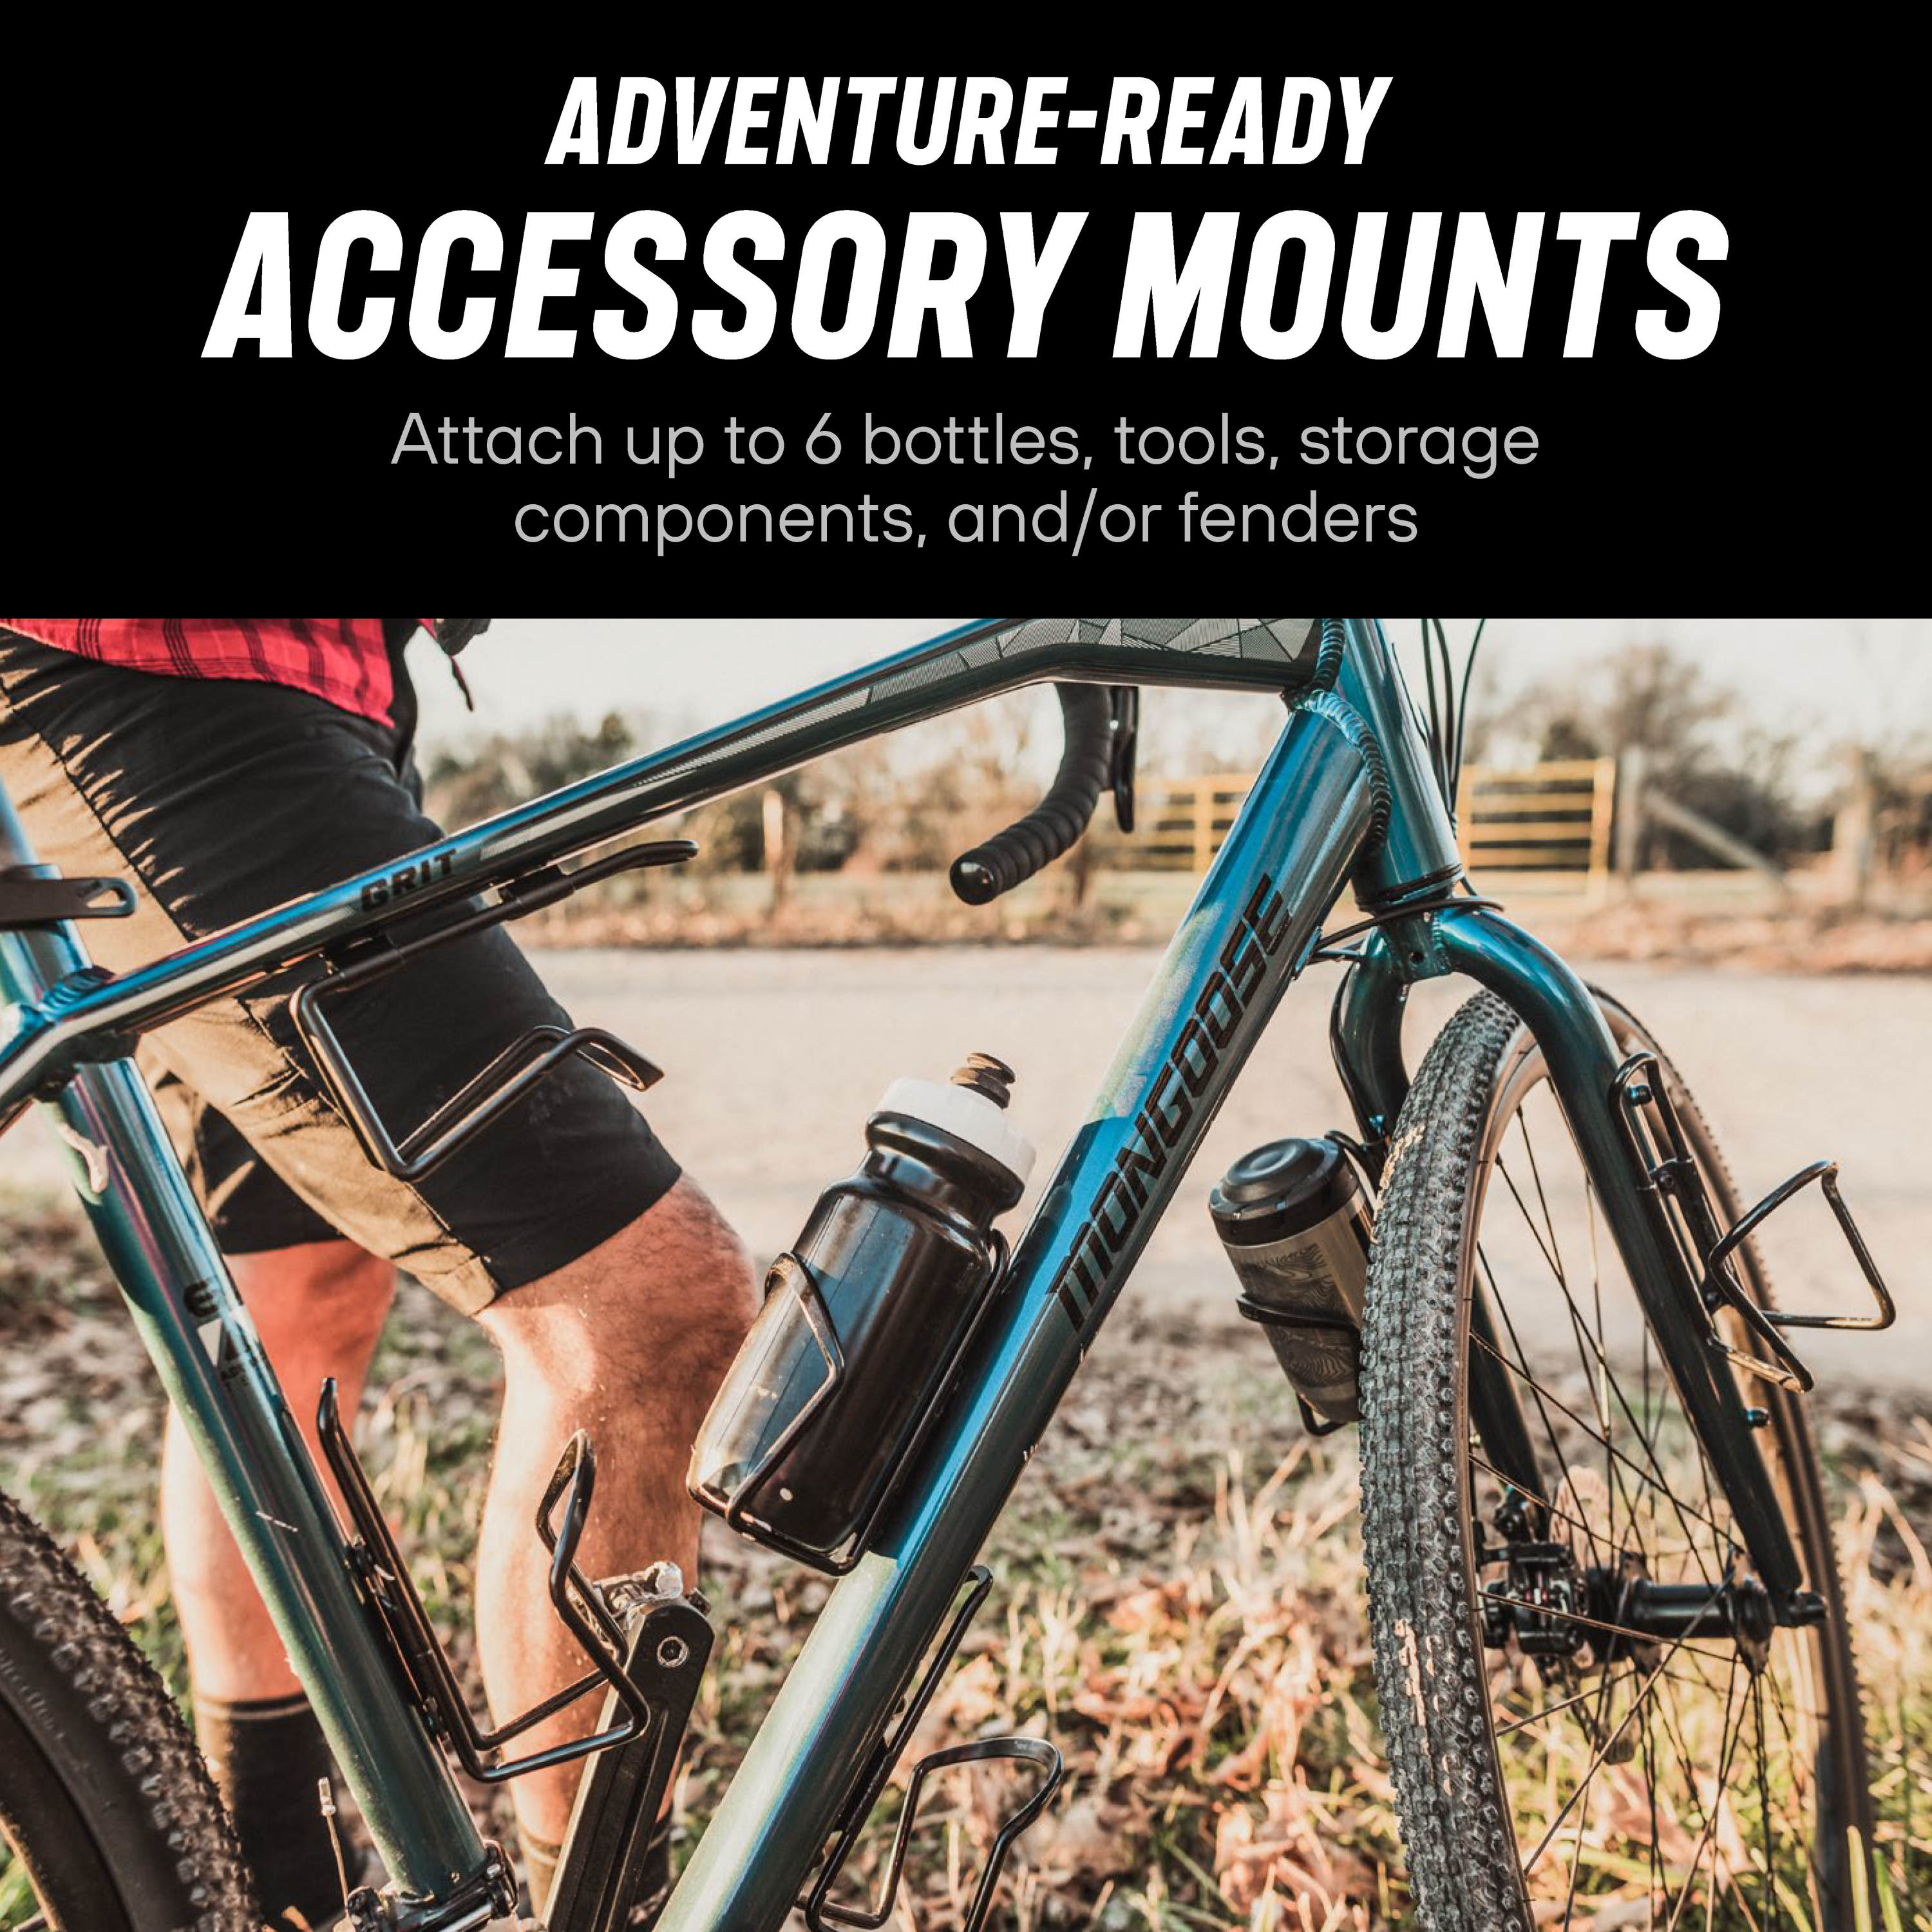 Mongoose Grit Adventure Road Bike, 14 Speeds, 700c Wheels, Blue, Ages 14+ - image 2 of 8